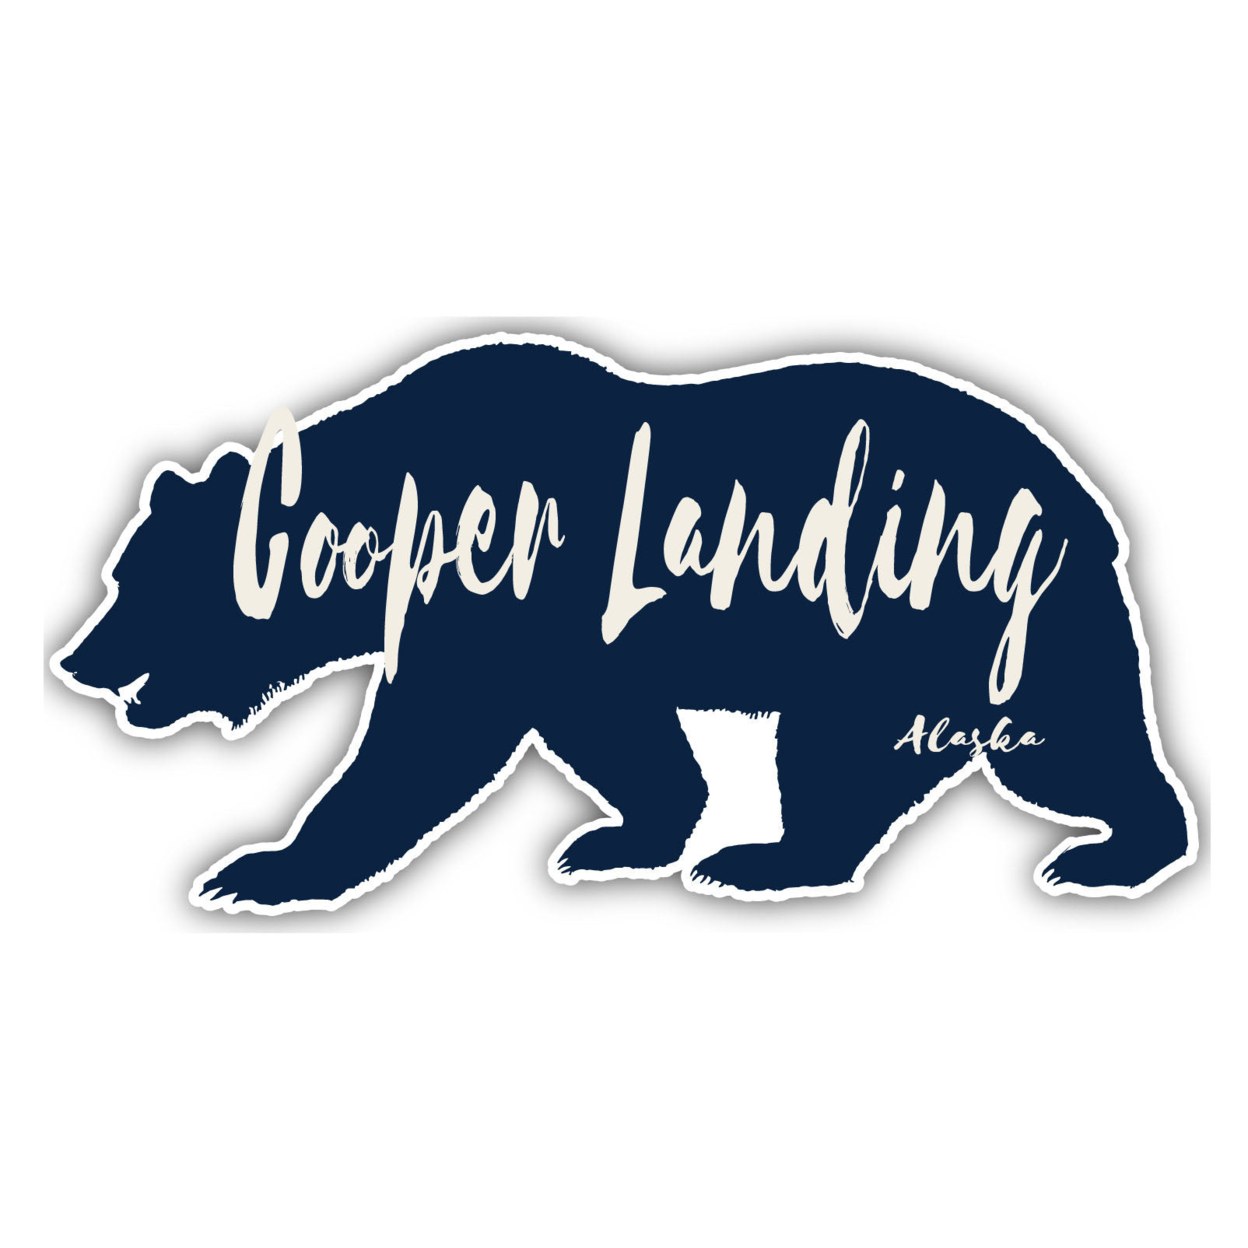 Cooper Landing Alaska Souvenir Decorative Stickers (Choose Theme And Size) - Single Unit, 2-Inch, Adventures Awaits